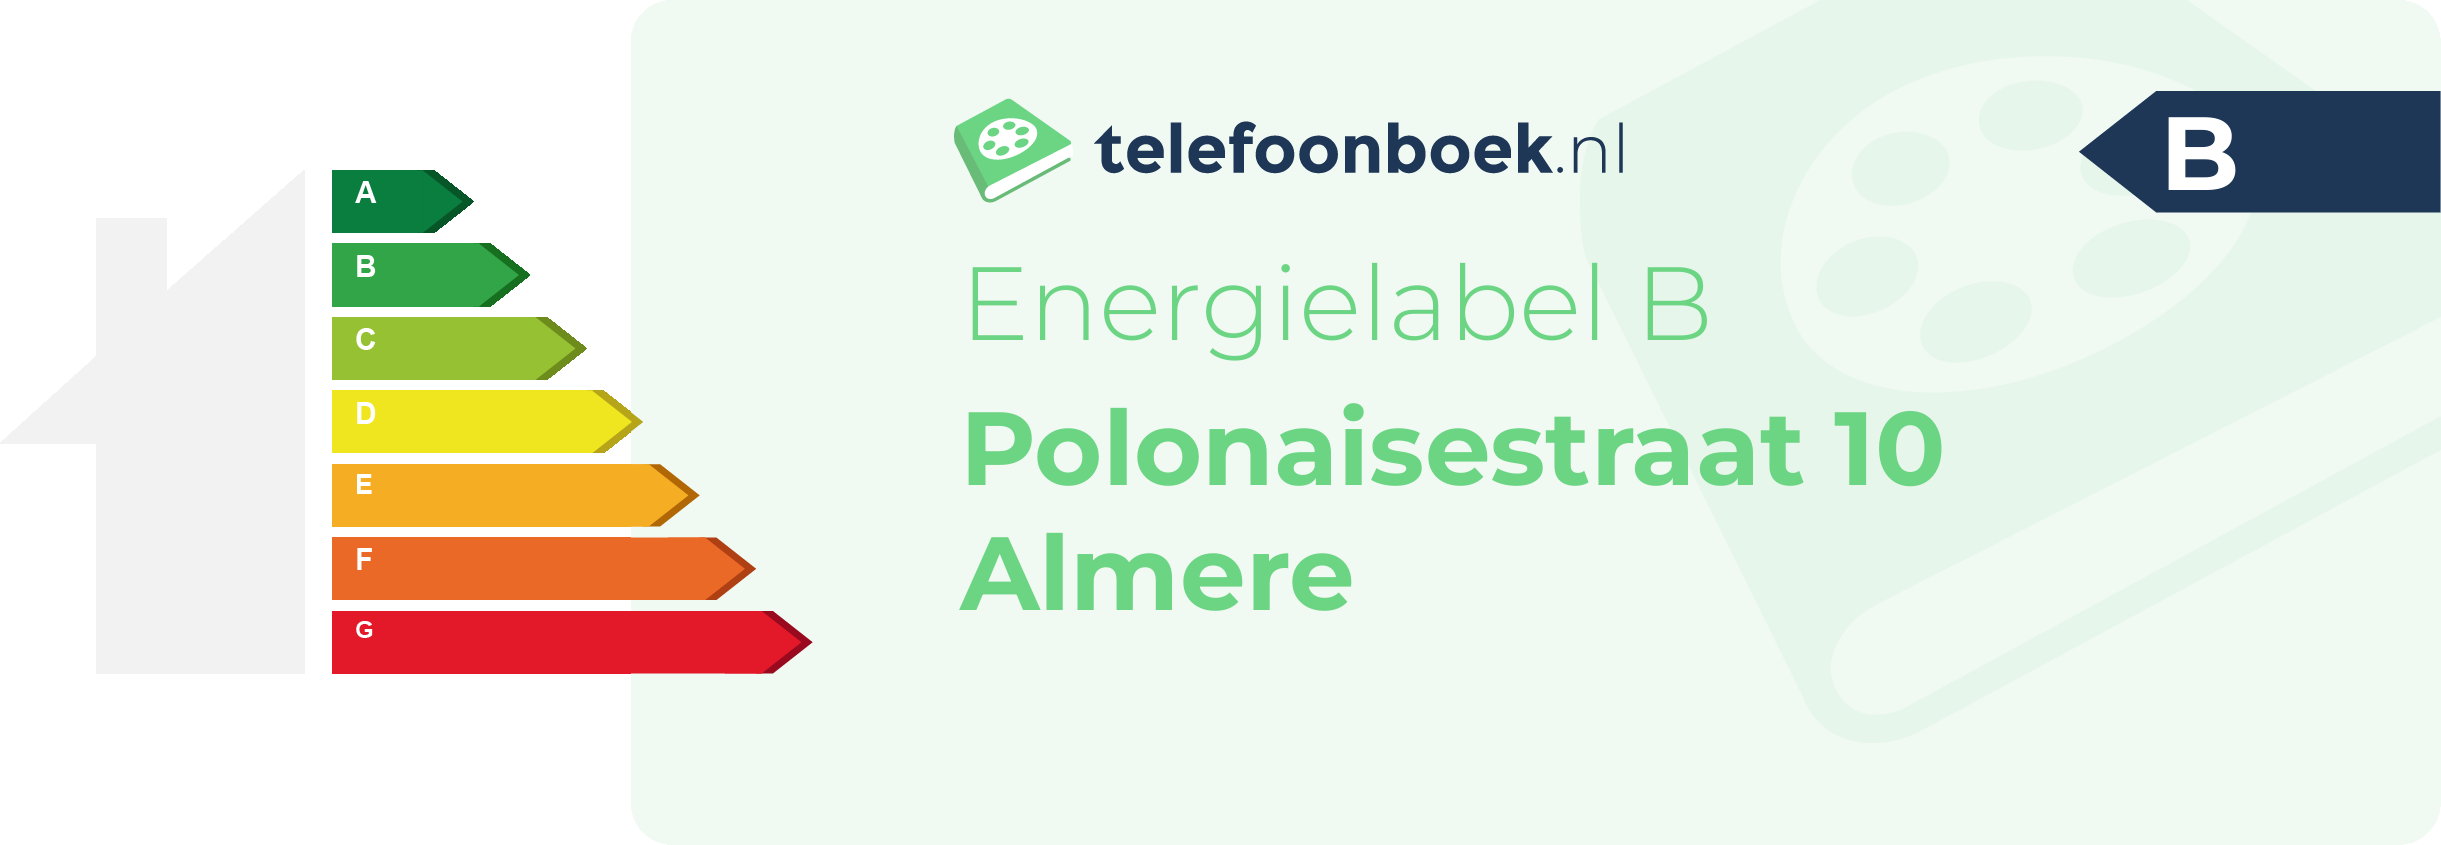 Energielabel Polonaisestraat 10 Almere